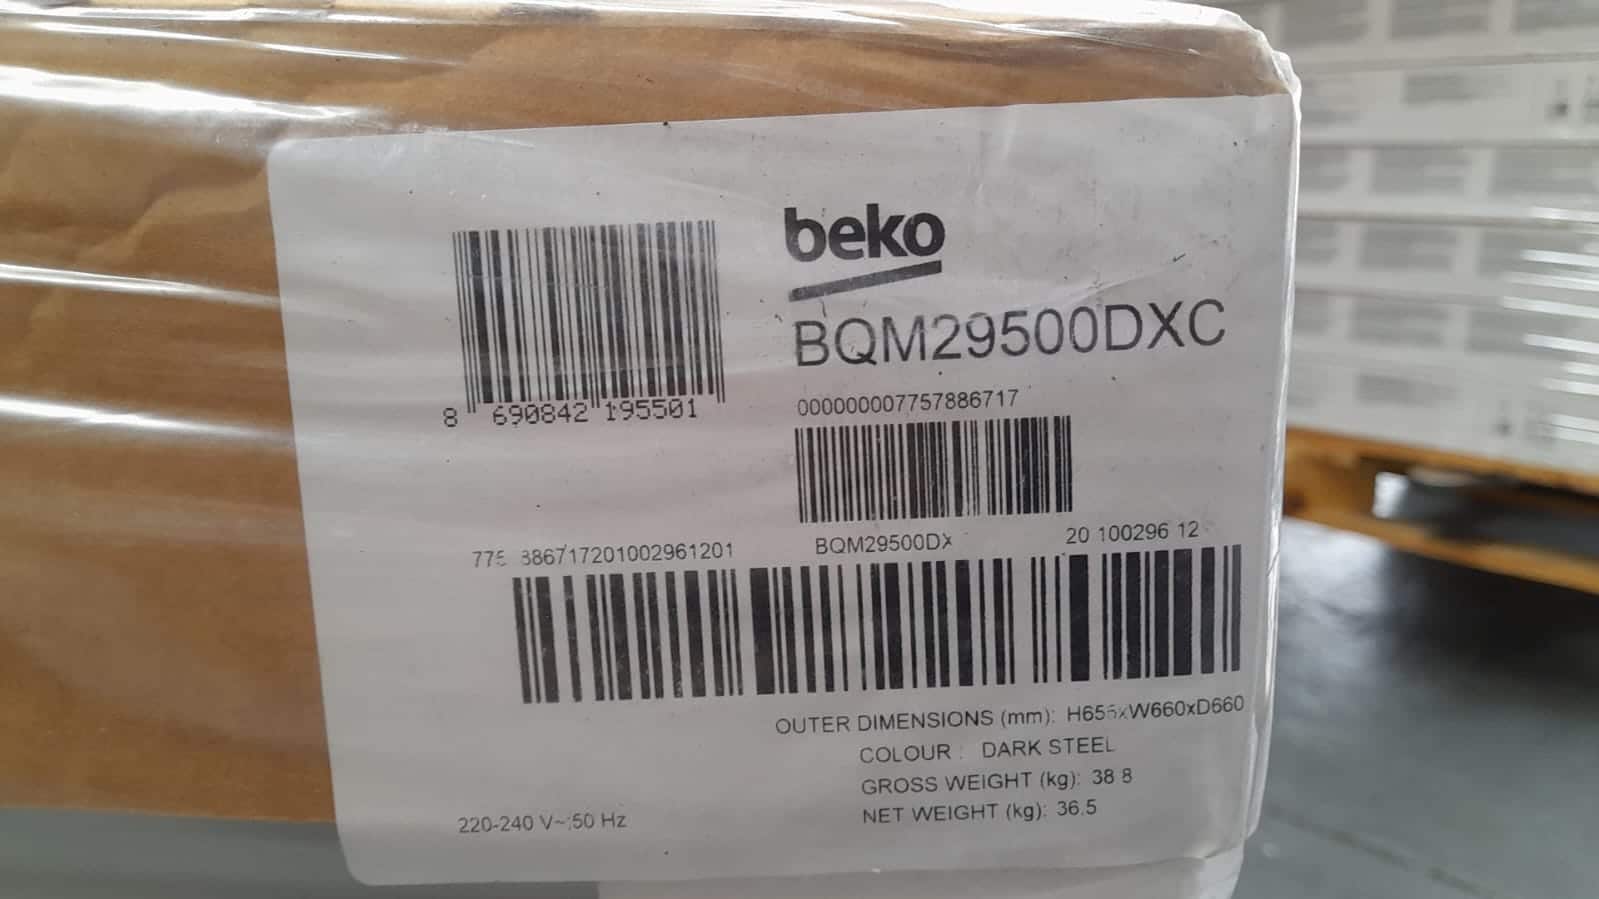 Beko BQM29500DXC Black Steel Built-in Electric Single Multifunction Oven Cosmetic 5501